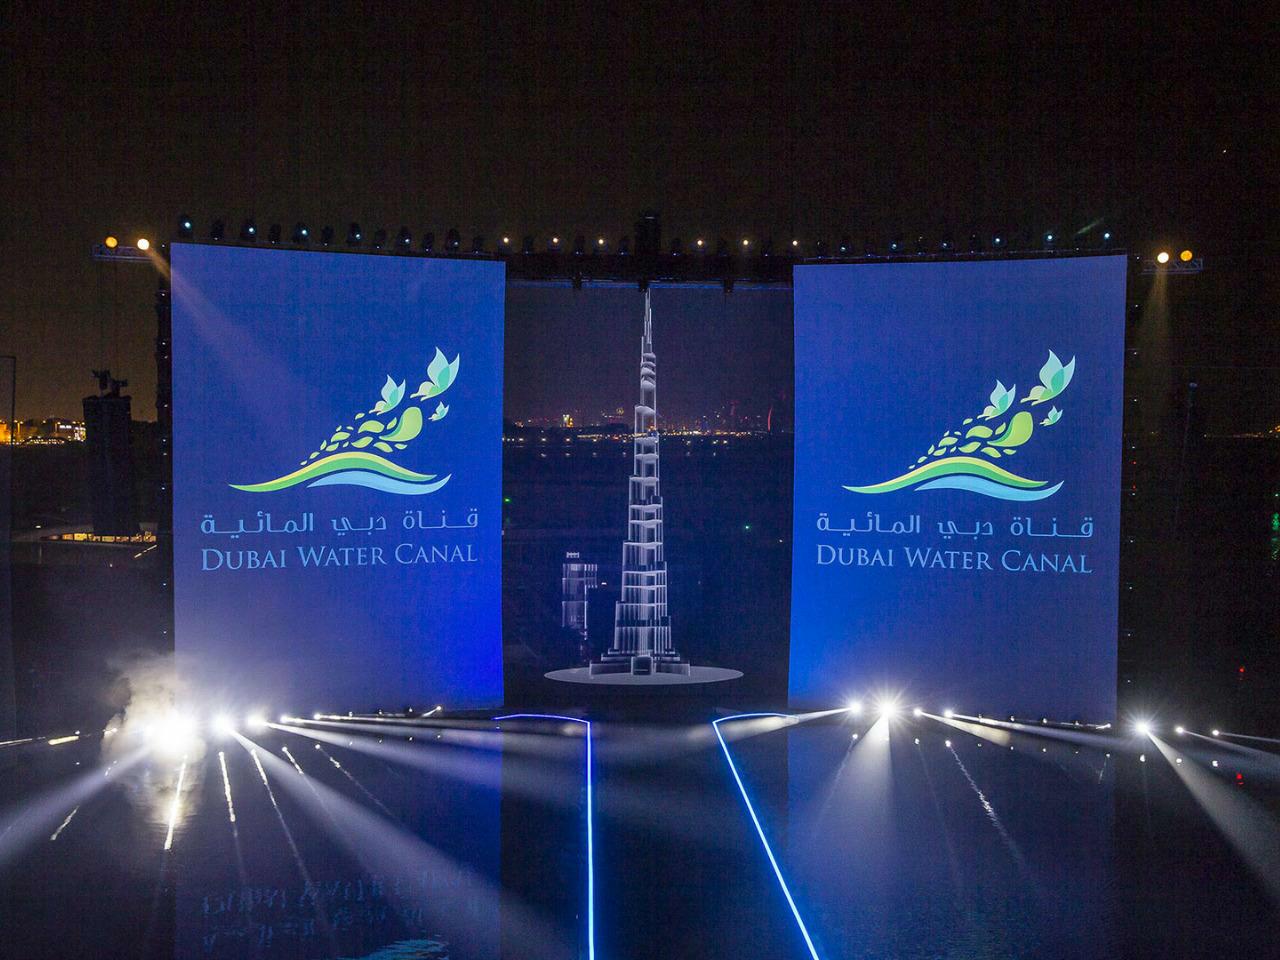 Dubai Water Canal - Opening 2016